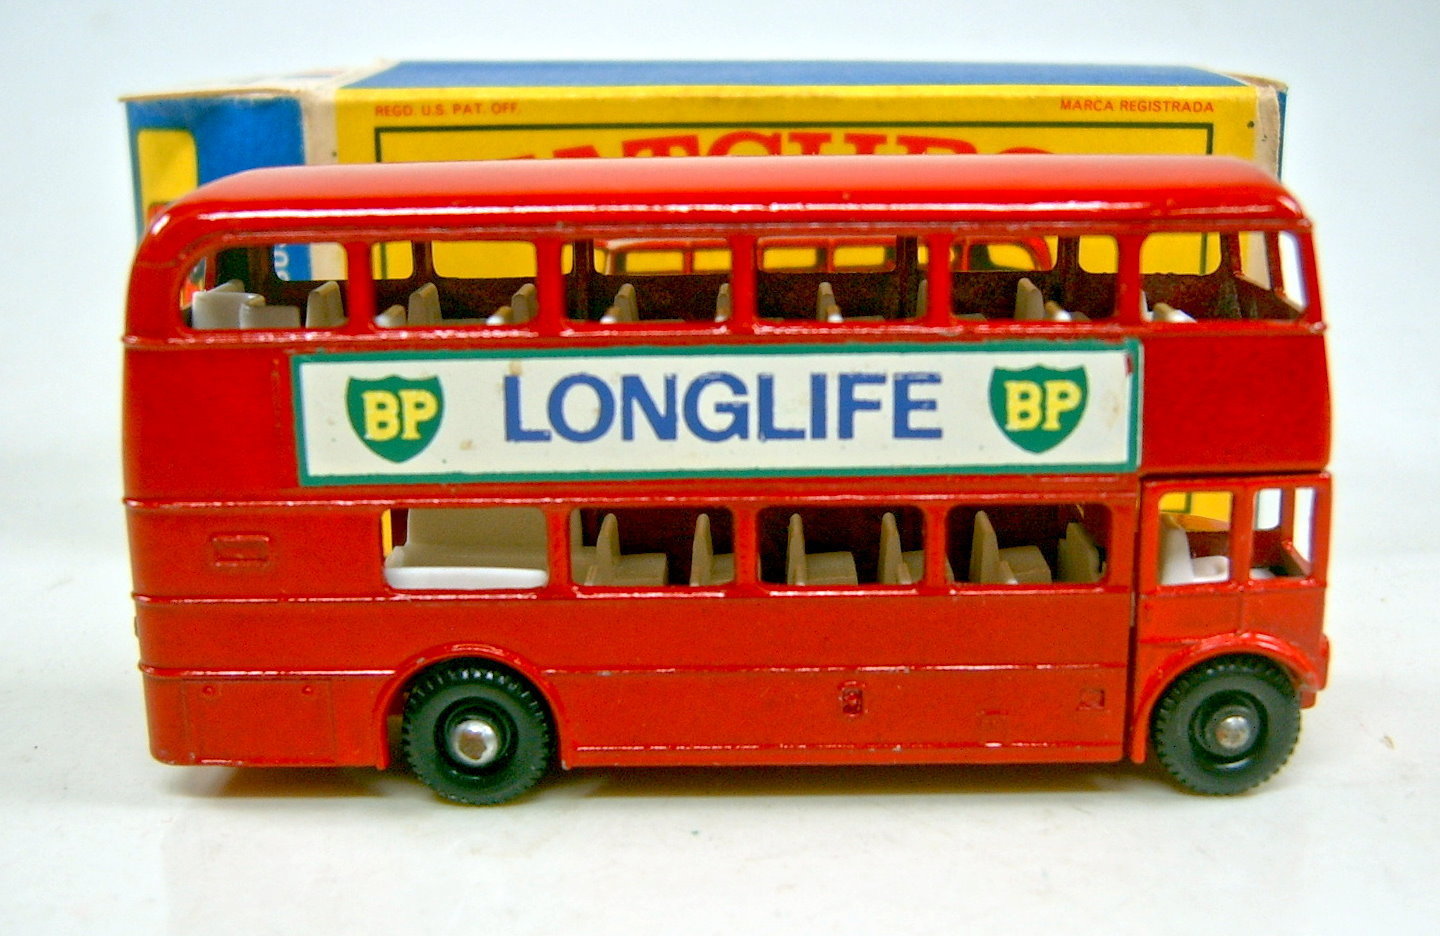 Details about   Matchbox Lesney 5D London Bus BP Longlife Decal Transfer Water slide not Sticker 